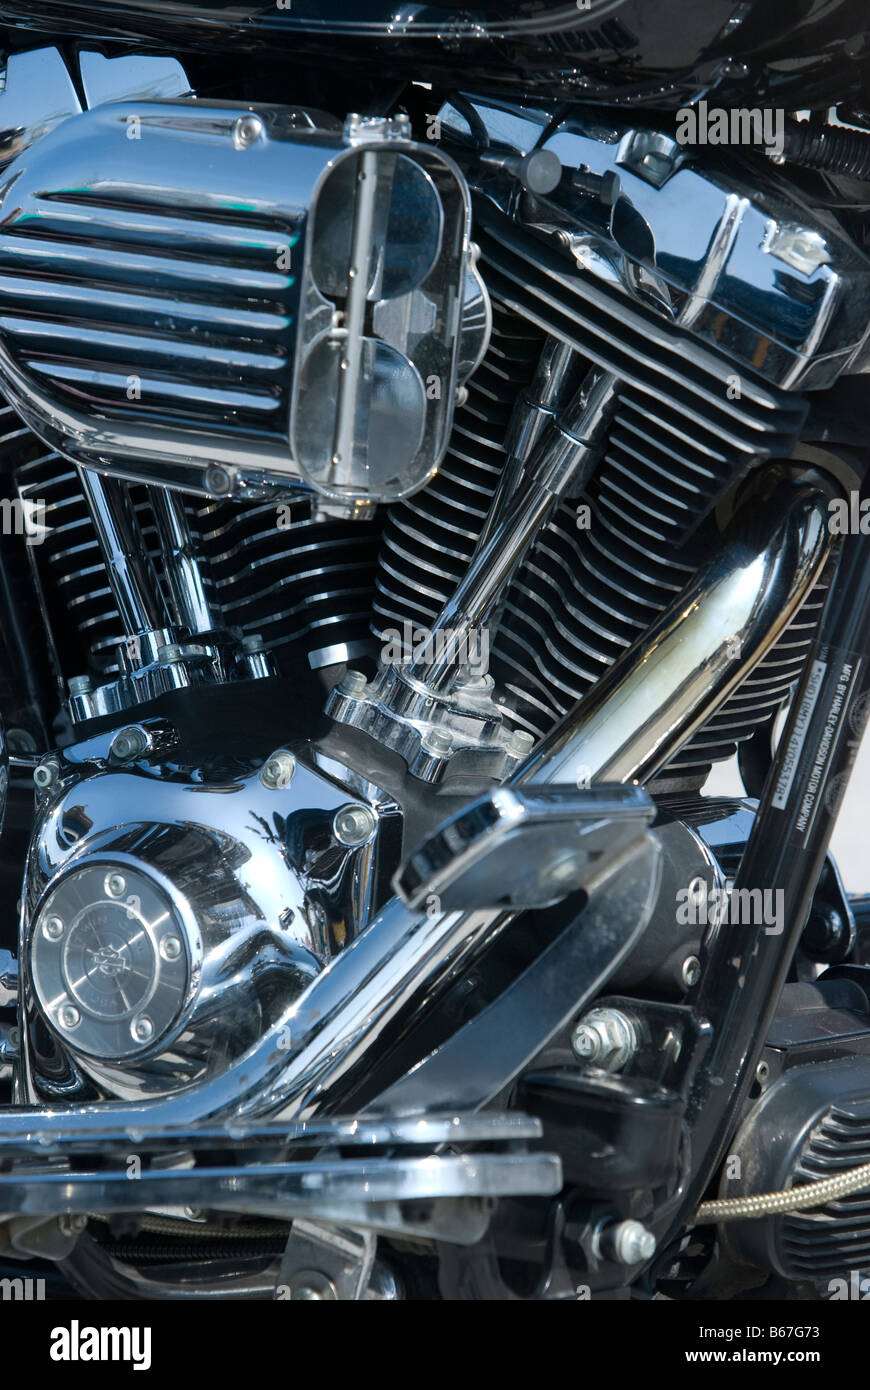 Classic V2 engine of Harley Davidson motorcycle Stock Photo - Alamy